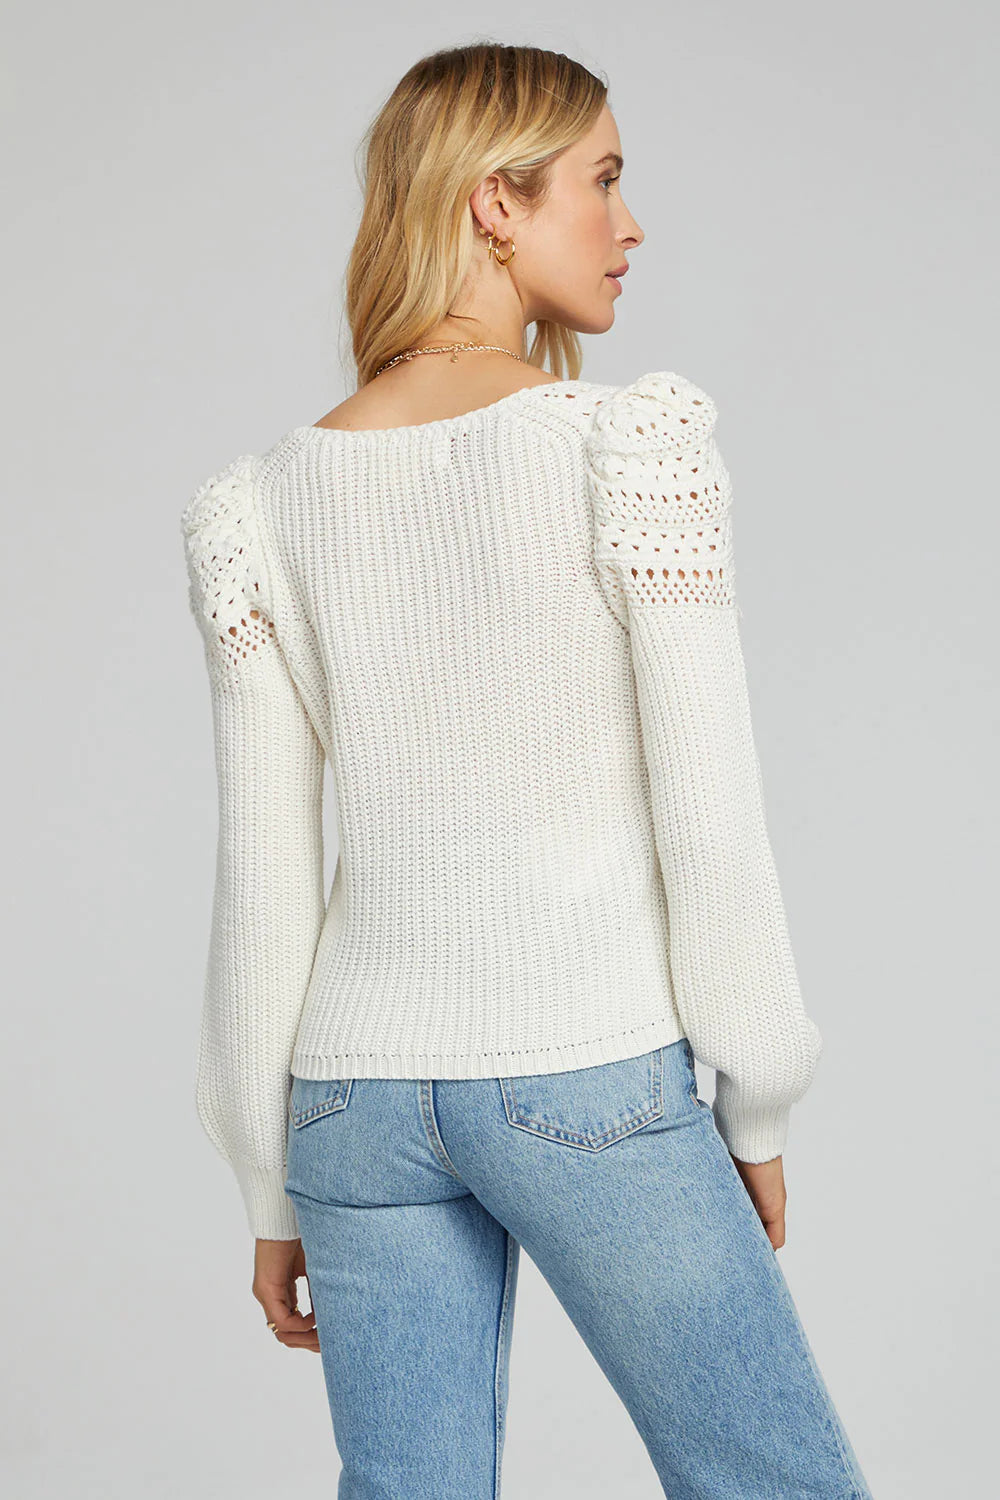 Corrine Pointelle Sweater